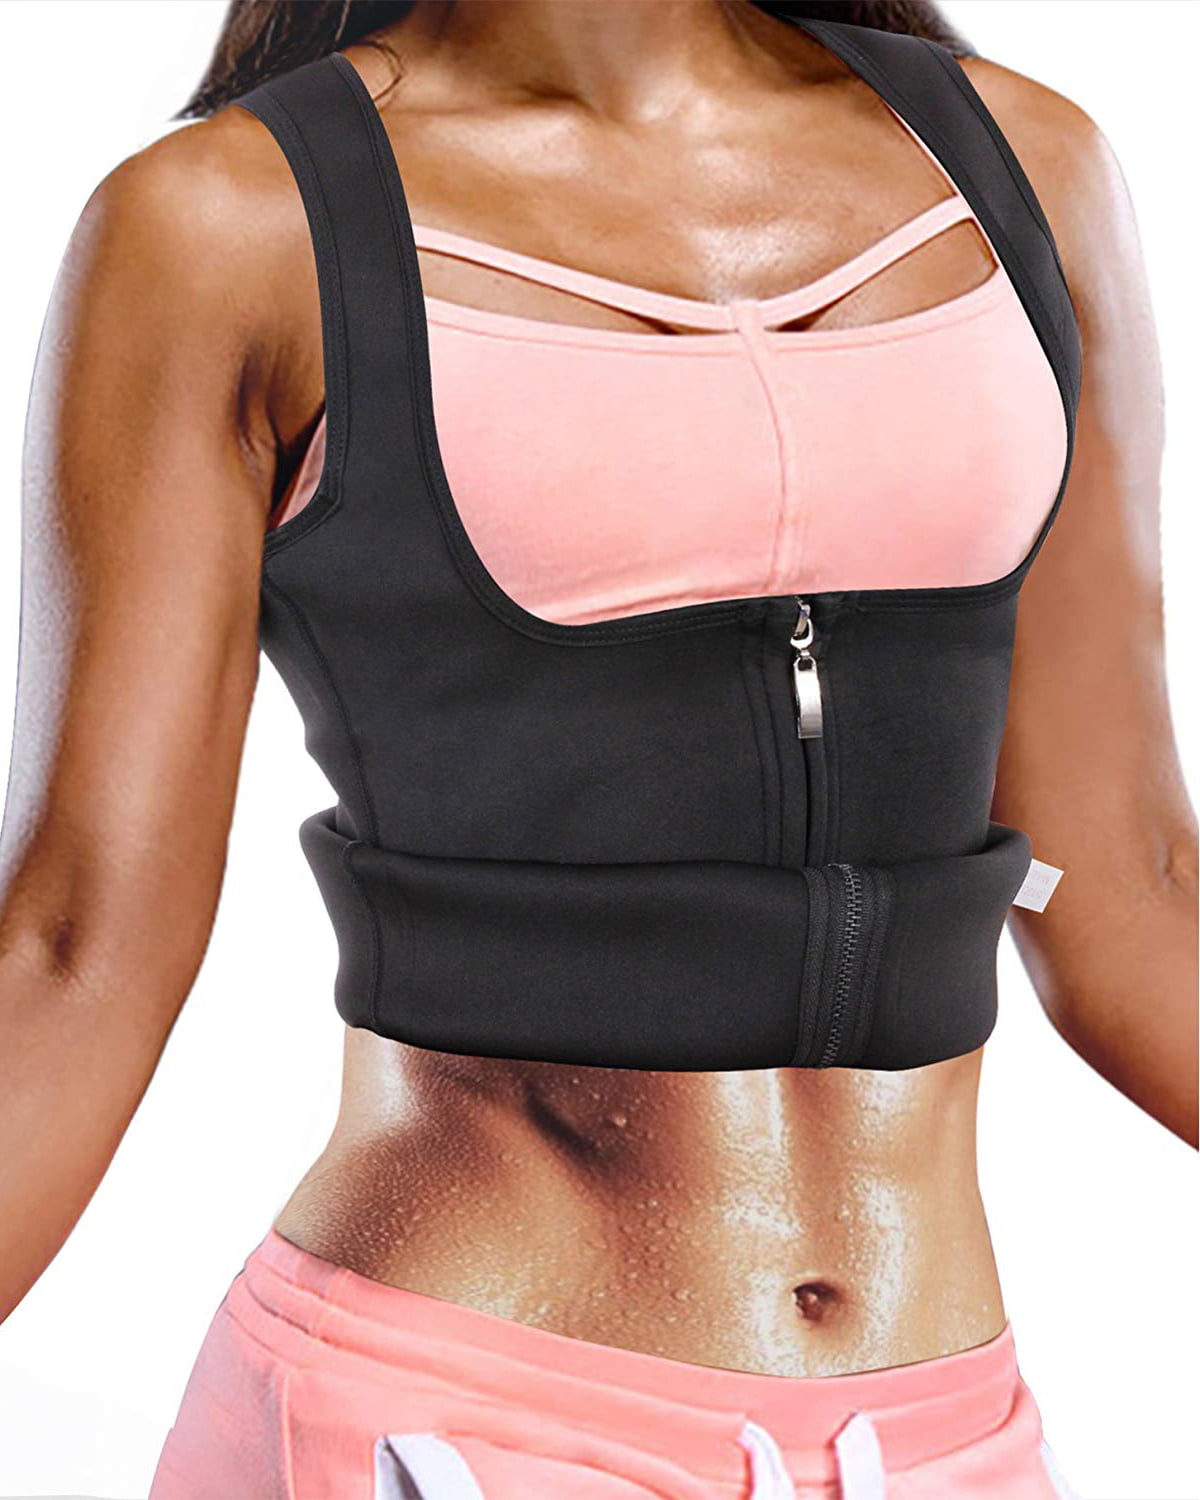 Joyshaper Hot Sweat Sauna Suit Vest for Weight Loss Women Neoprene Waist Trainer Corset Slimming Sweat Vest Workout Waist Cincher Body Shaper 